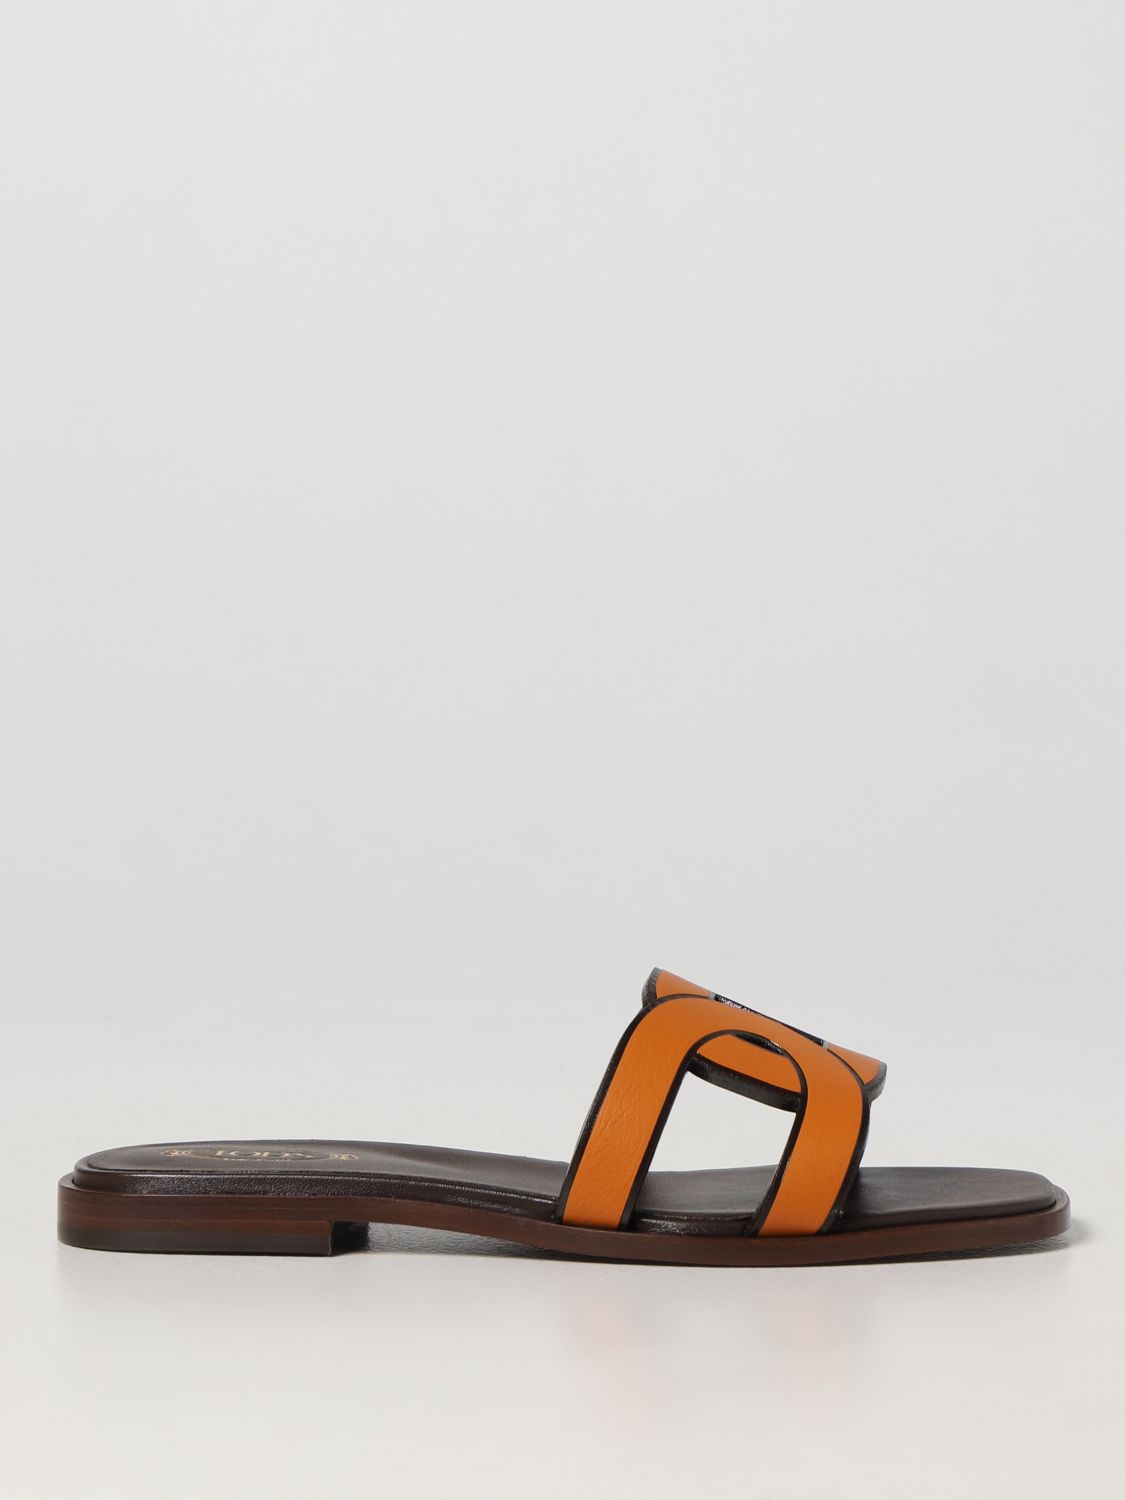 Dubbelzinnigheid erts wijn TOD'S: flat sandals for woman - Orange | Tod's flat sandals XXW70K0GU70MID  online on GIGLIO.COM